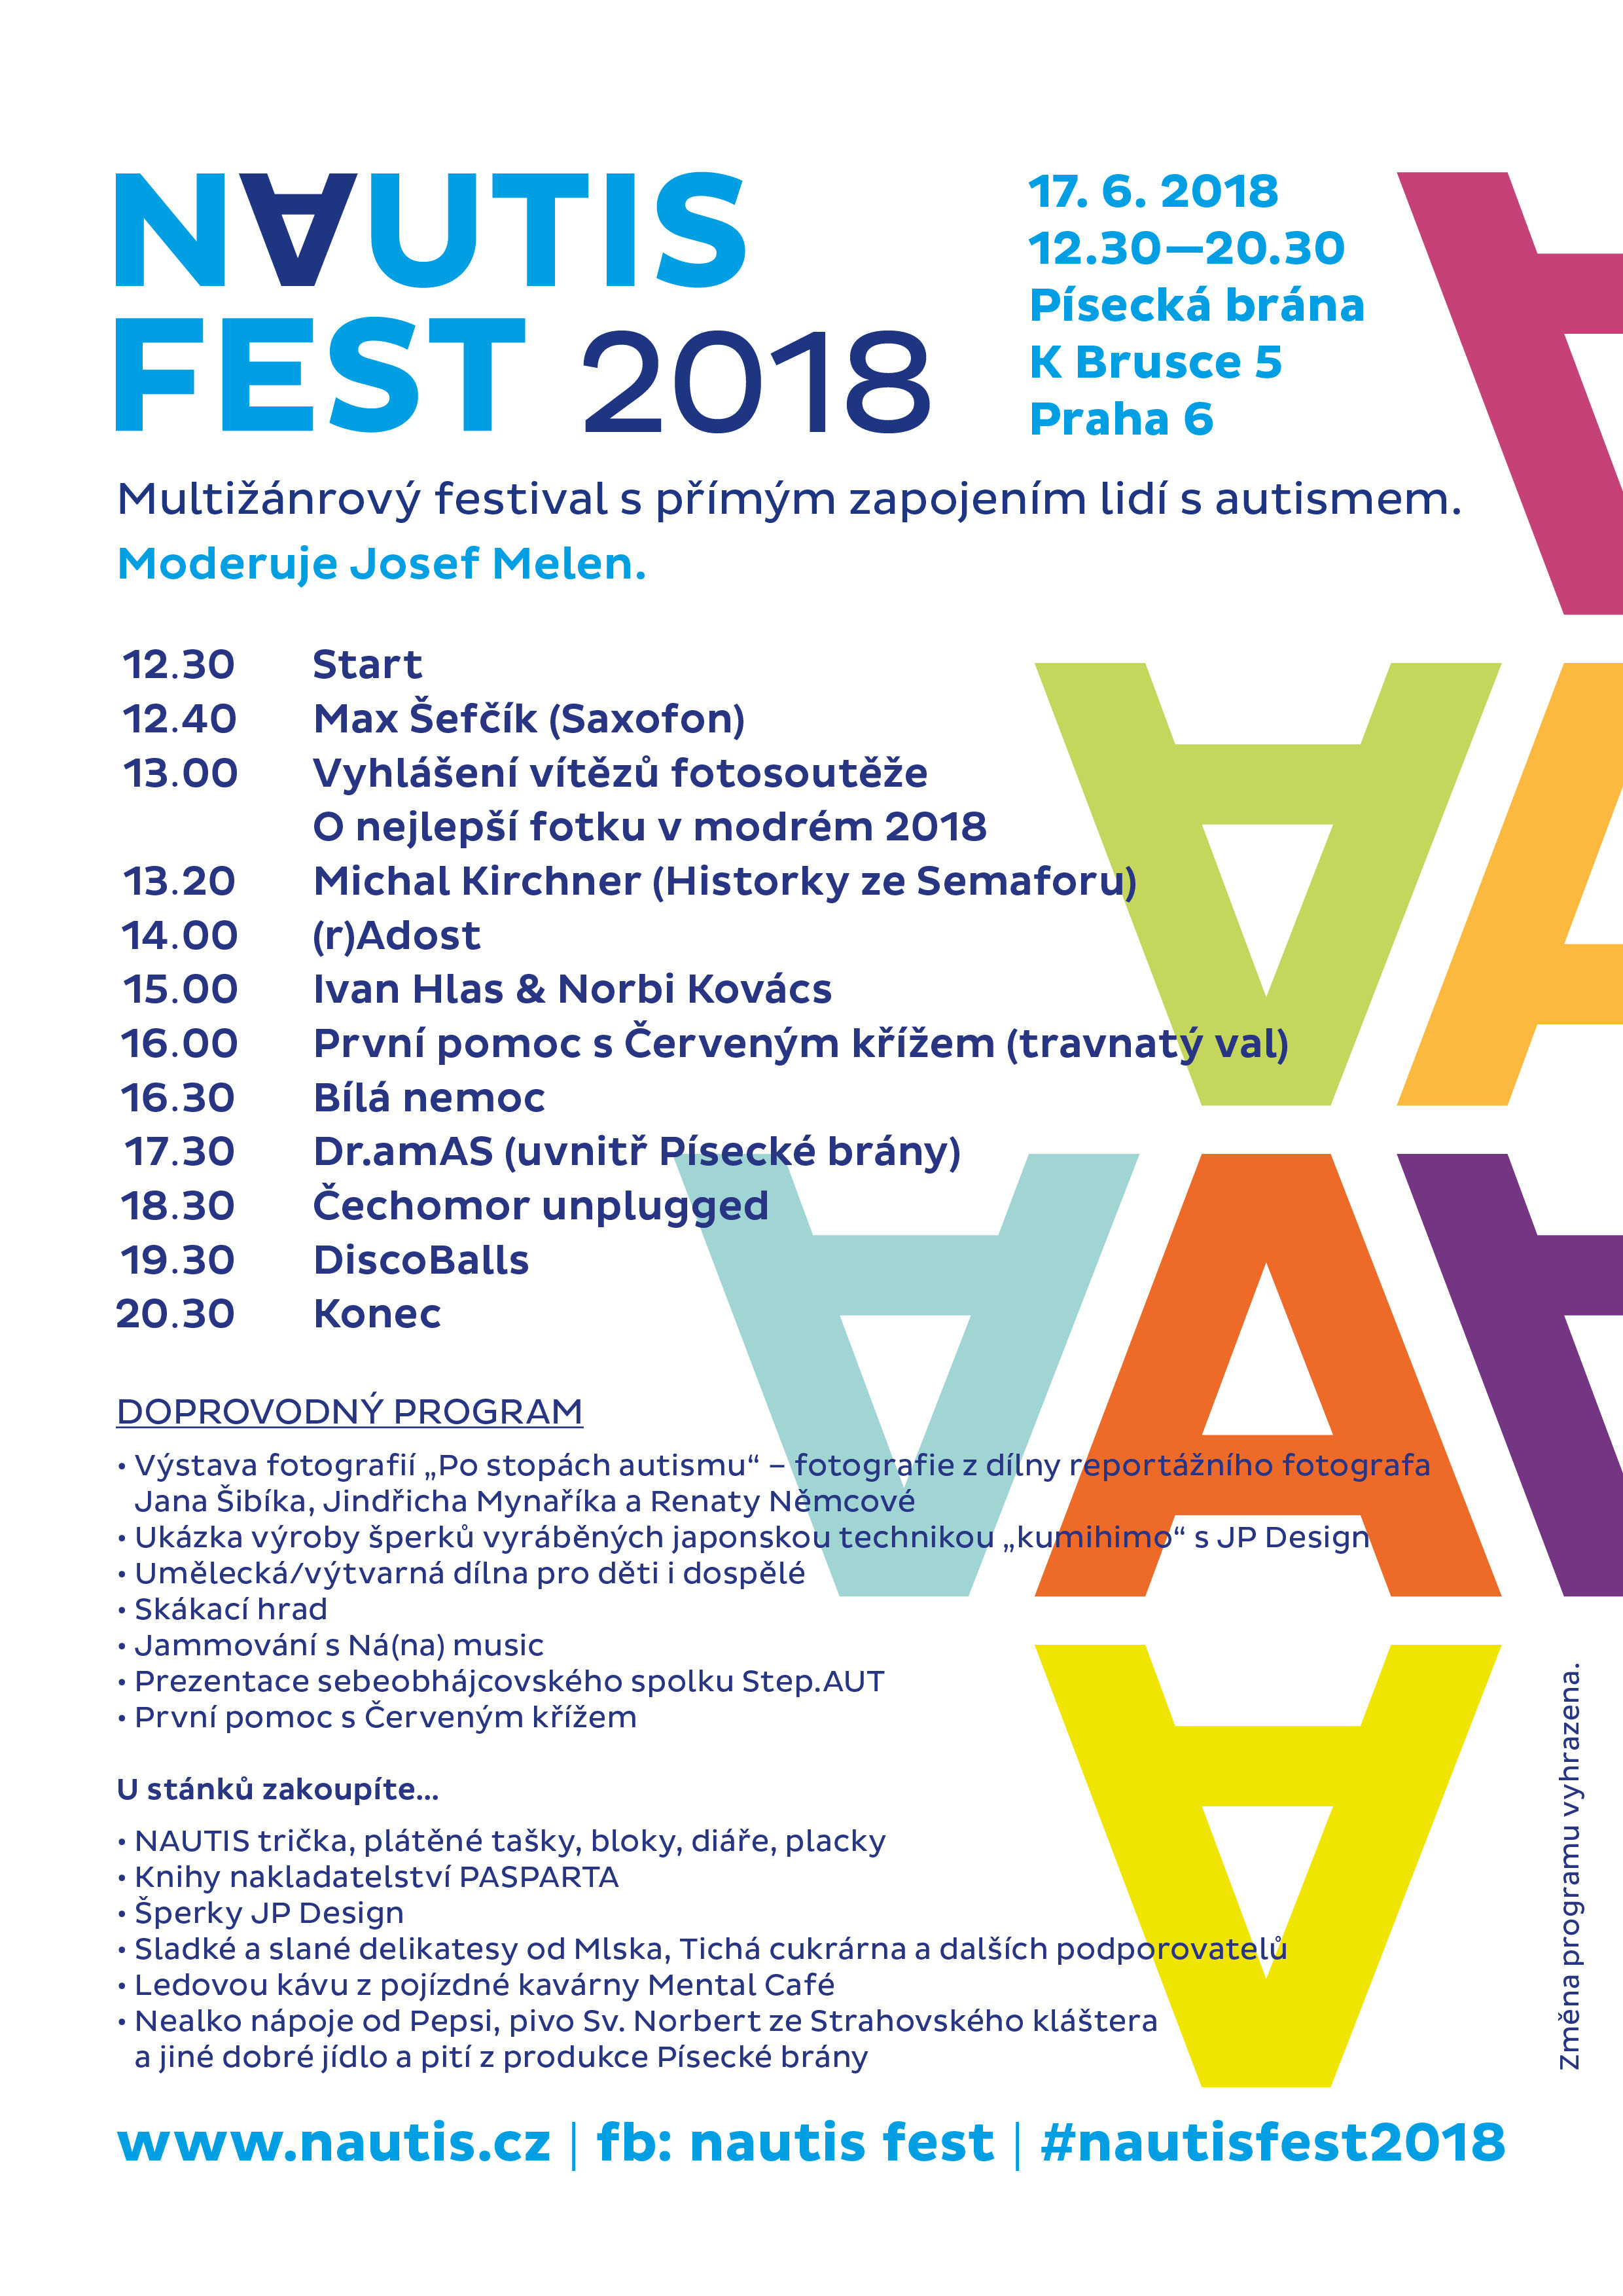 Nautisfest 2018 program